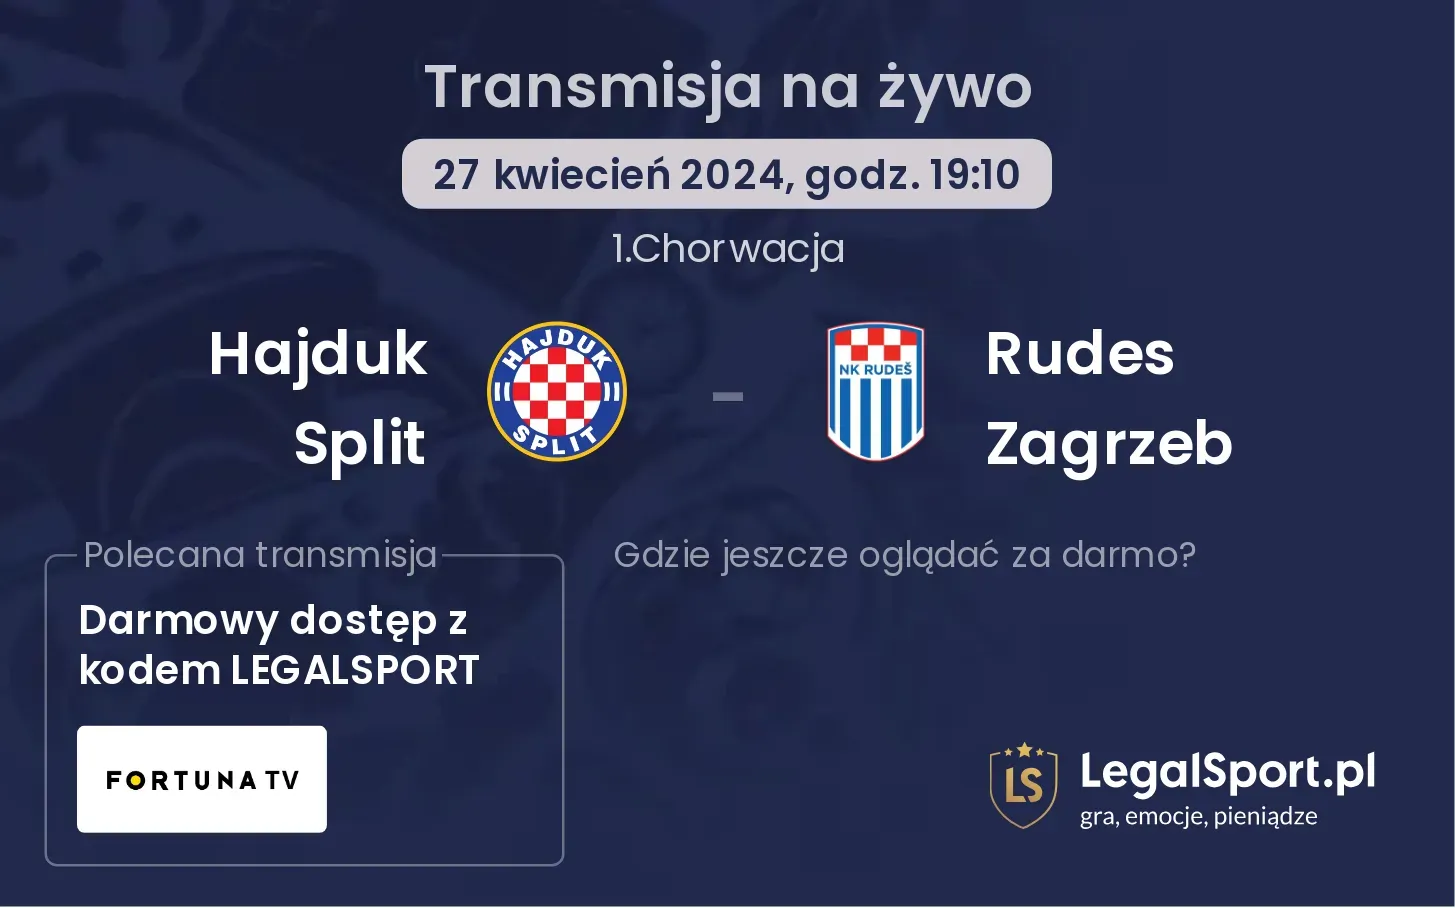 Hajduk Split - Rudes Zagrzeb transmisja na żywo